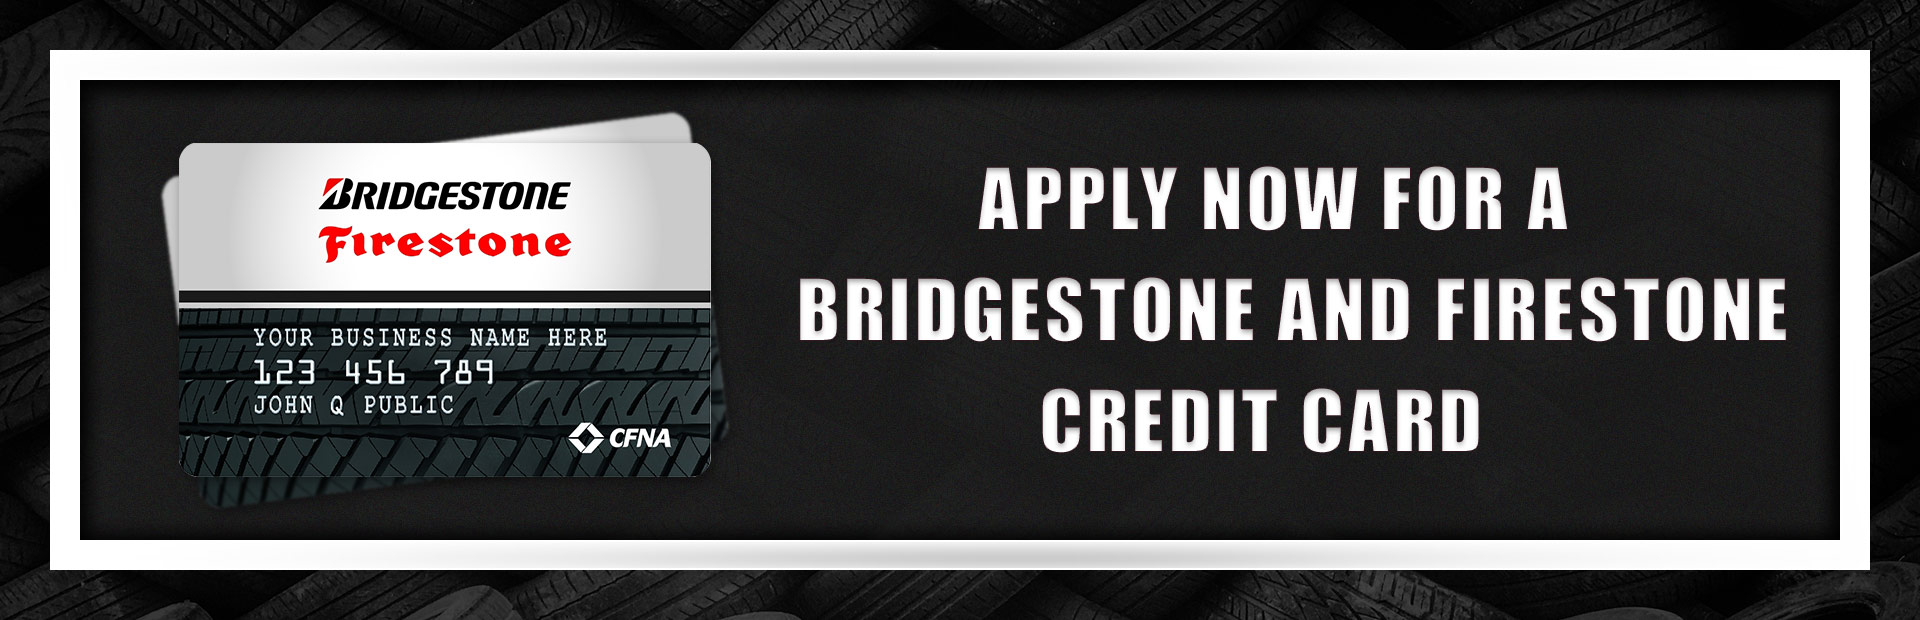 Apply now for a Bridgestone and Firestone Credit Card